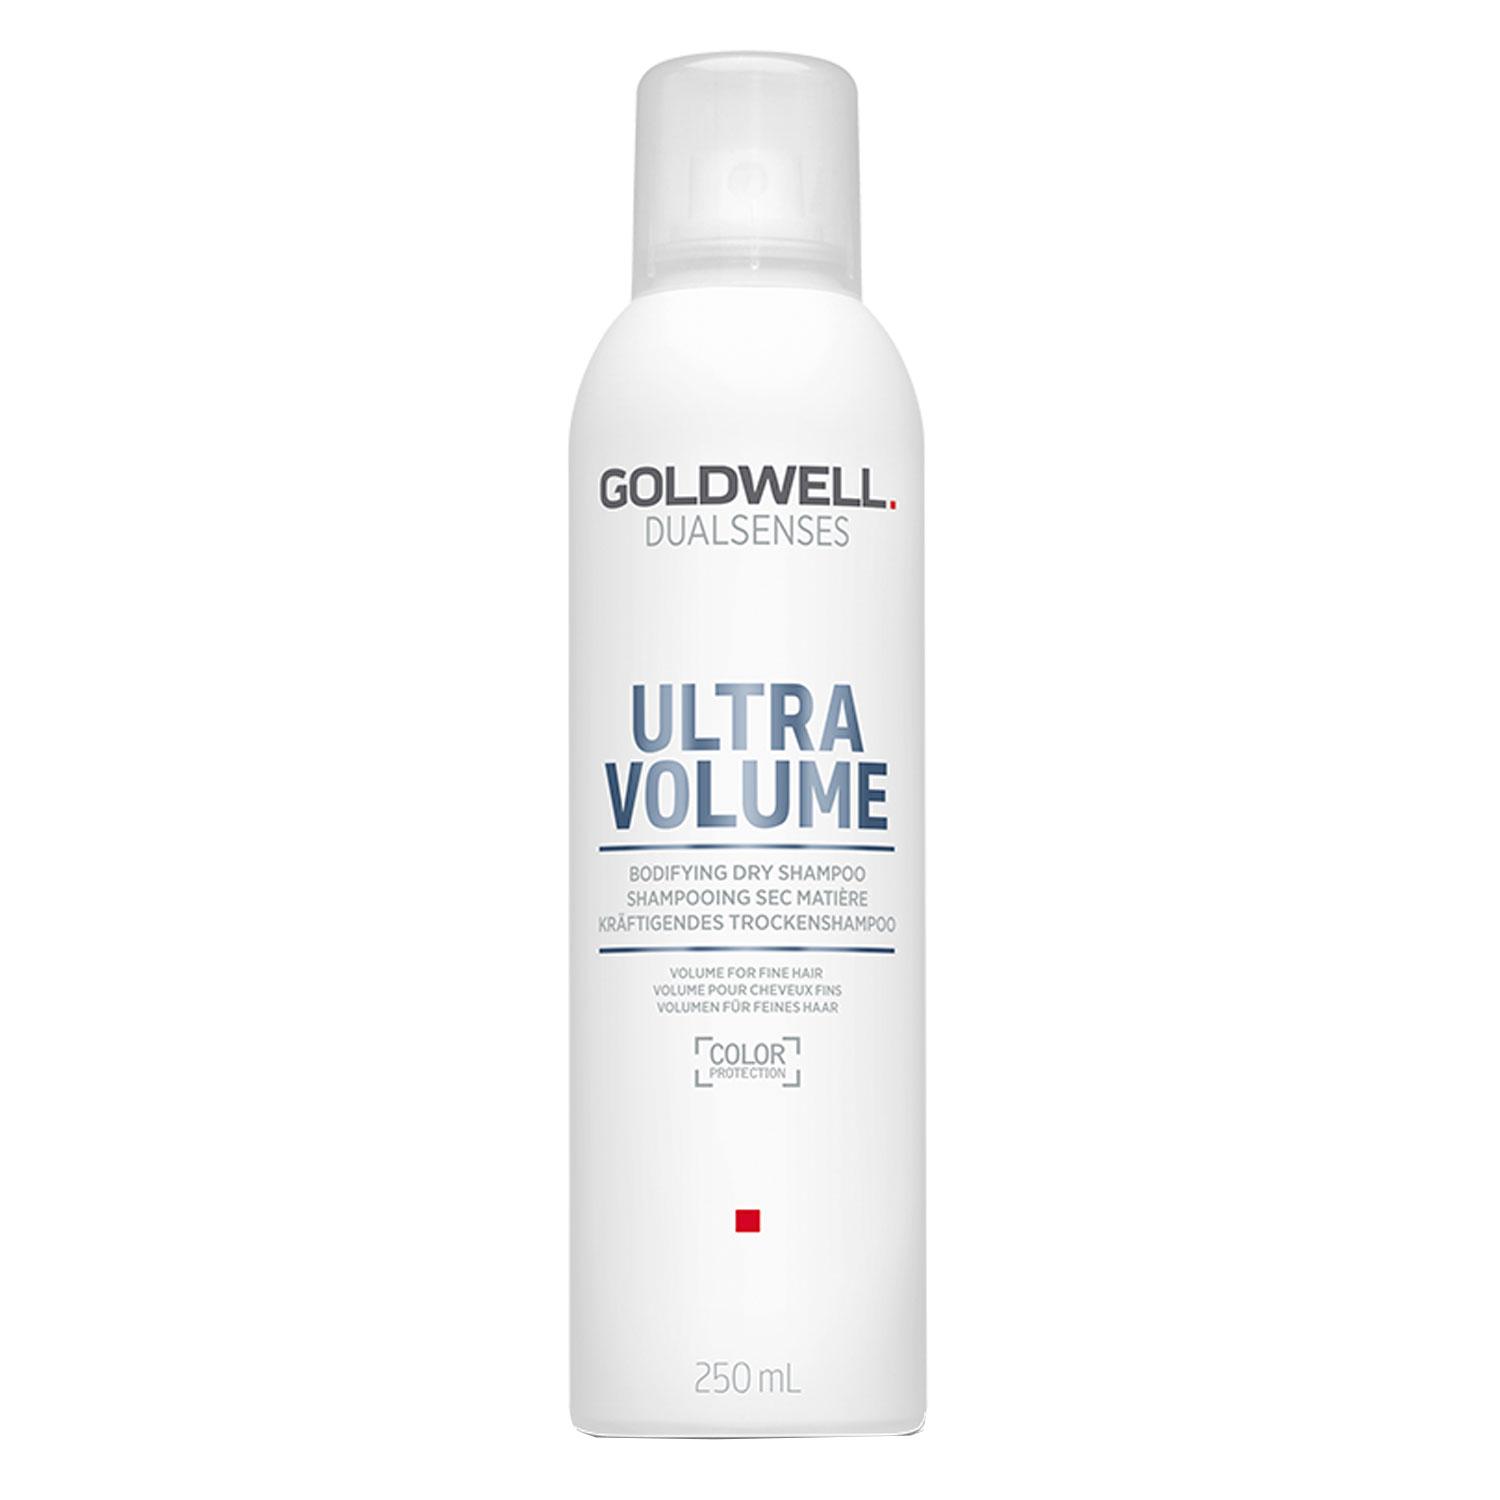 Dualsenses Ultra Volume - Bodifying Dry Shampoo